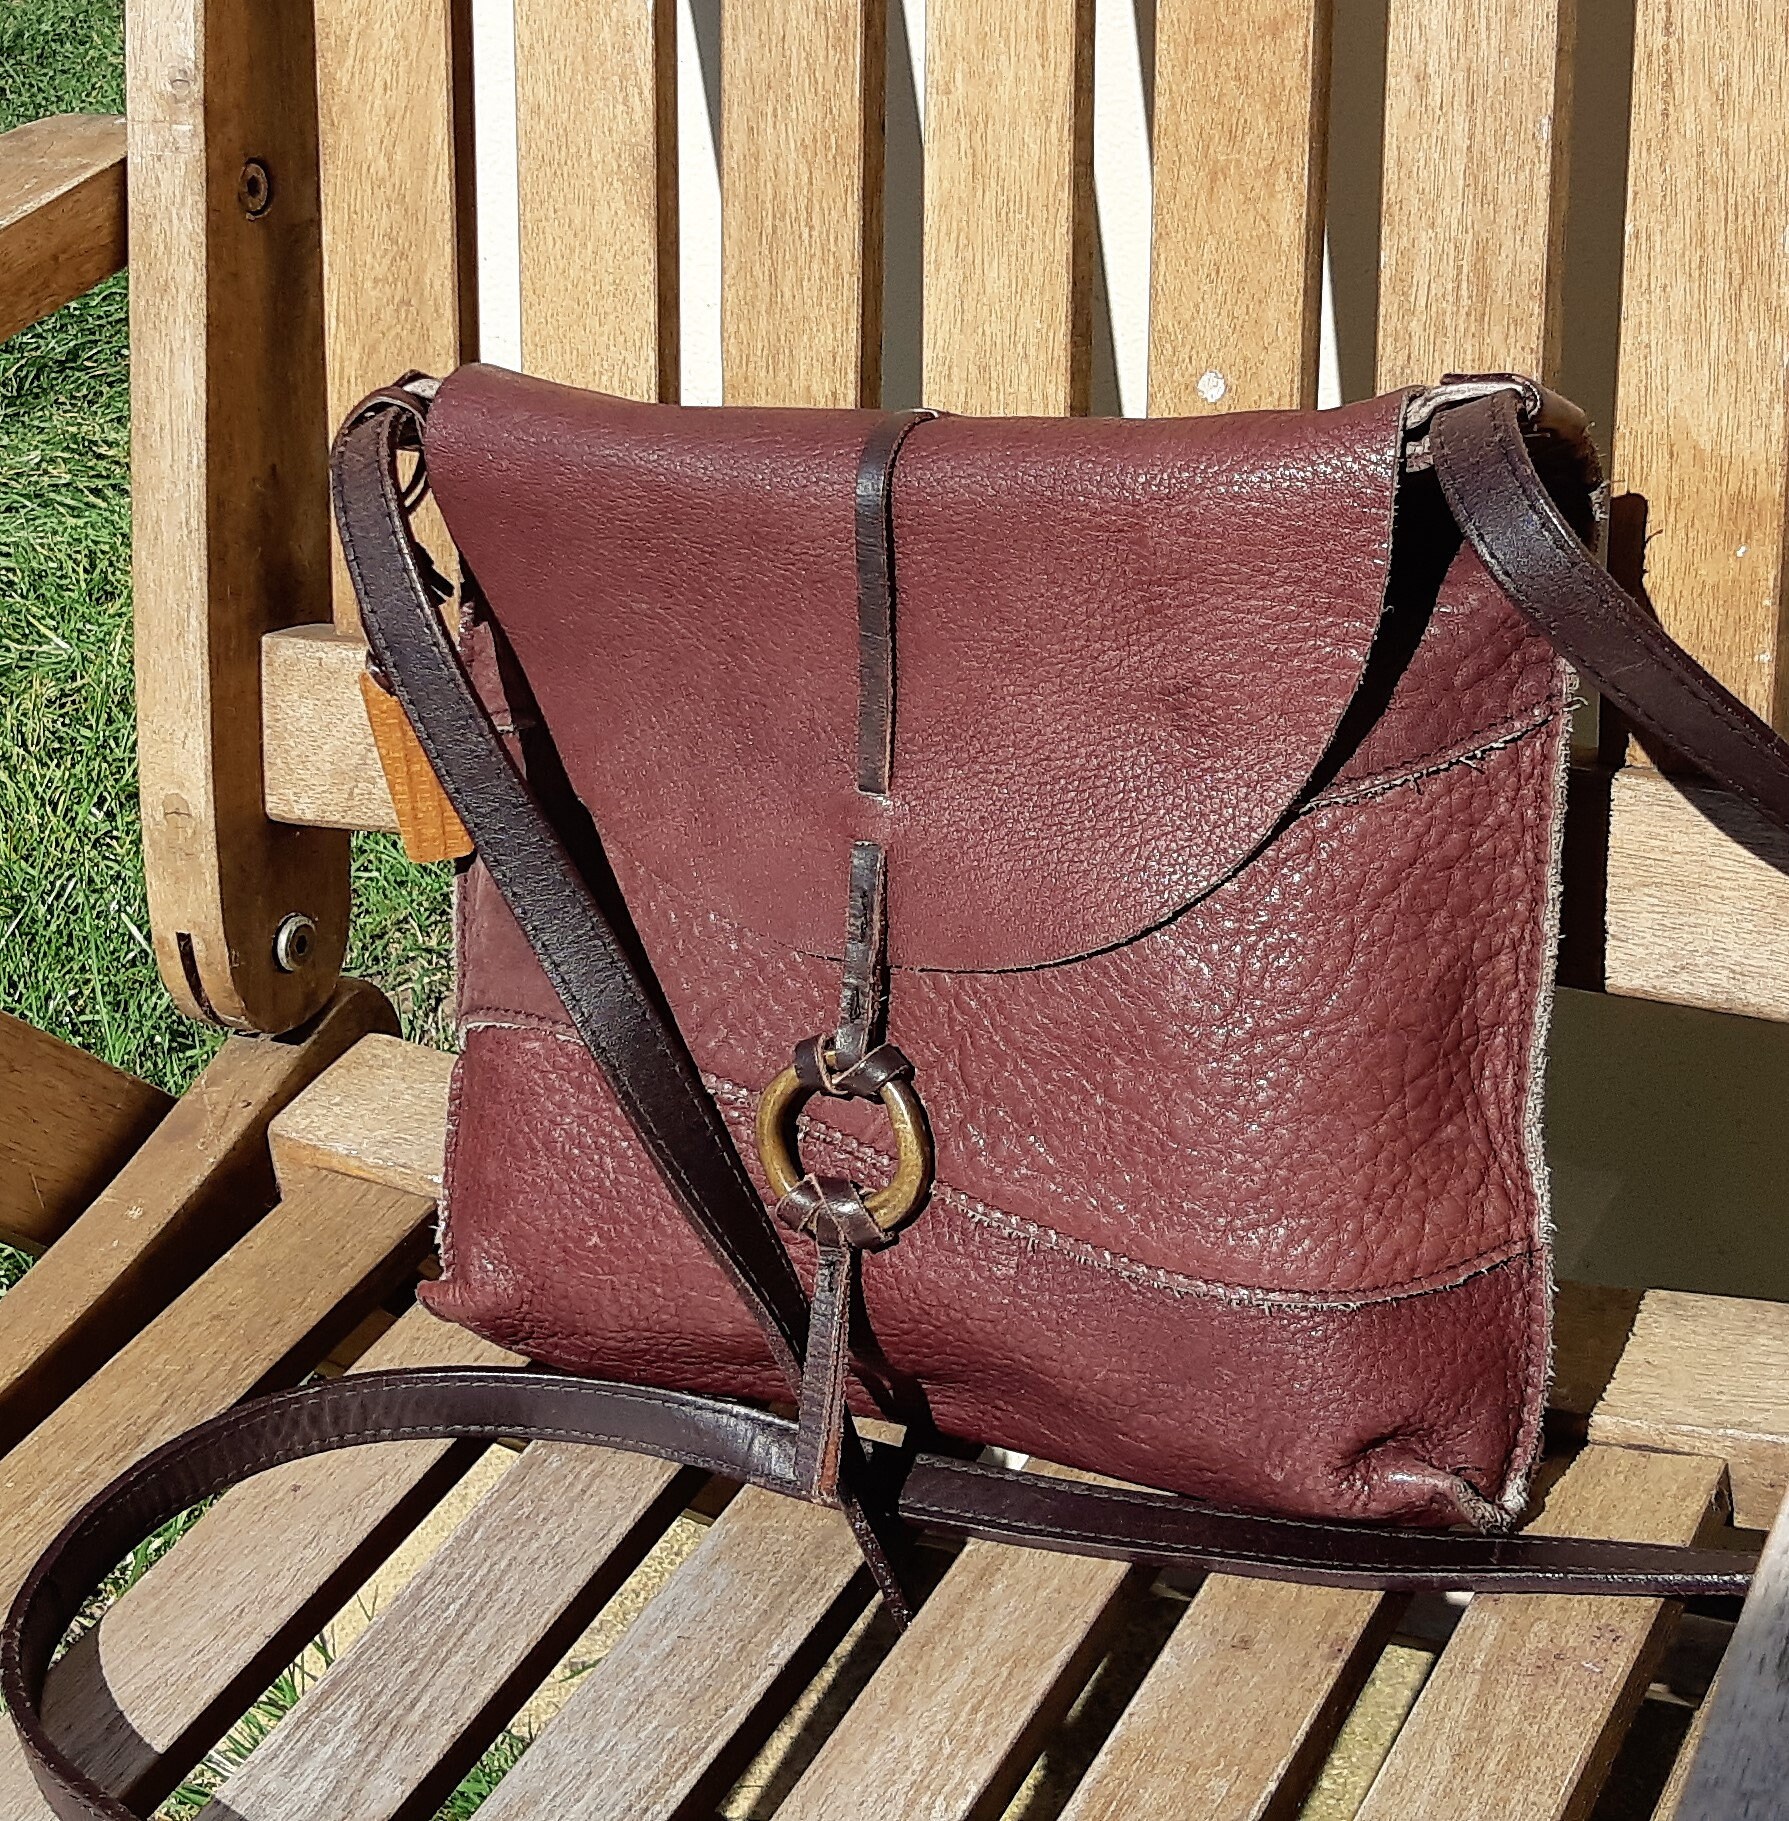 Hidesign brown leather cross body messenger Bag textured | Etsy